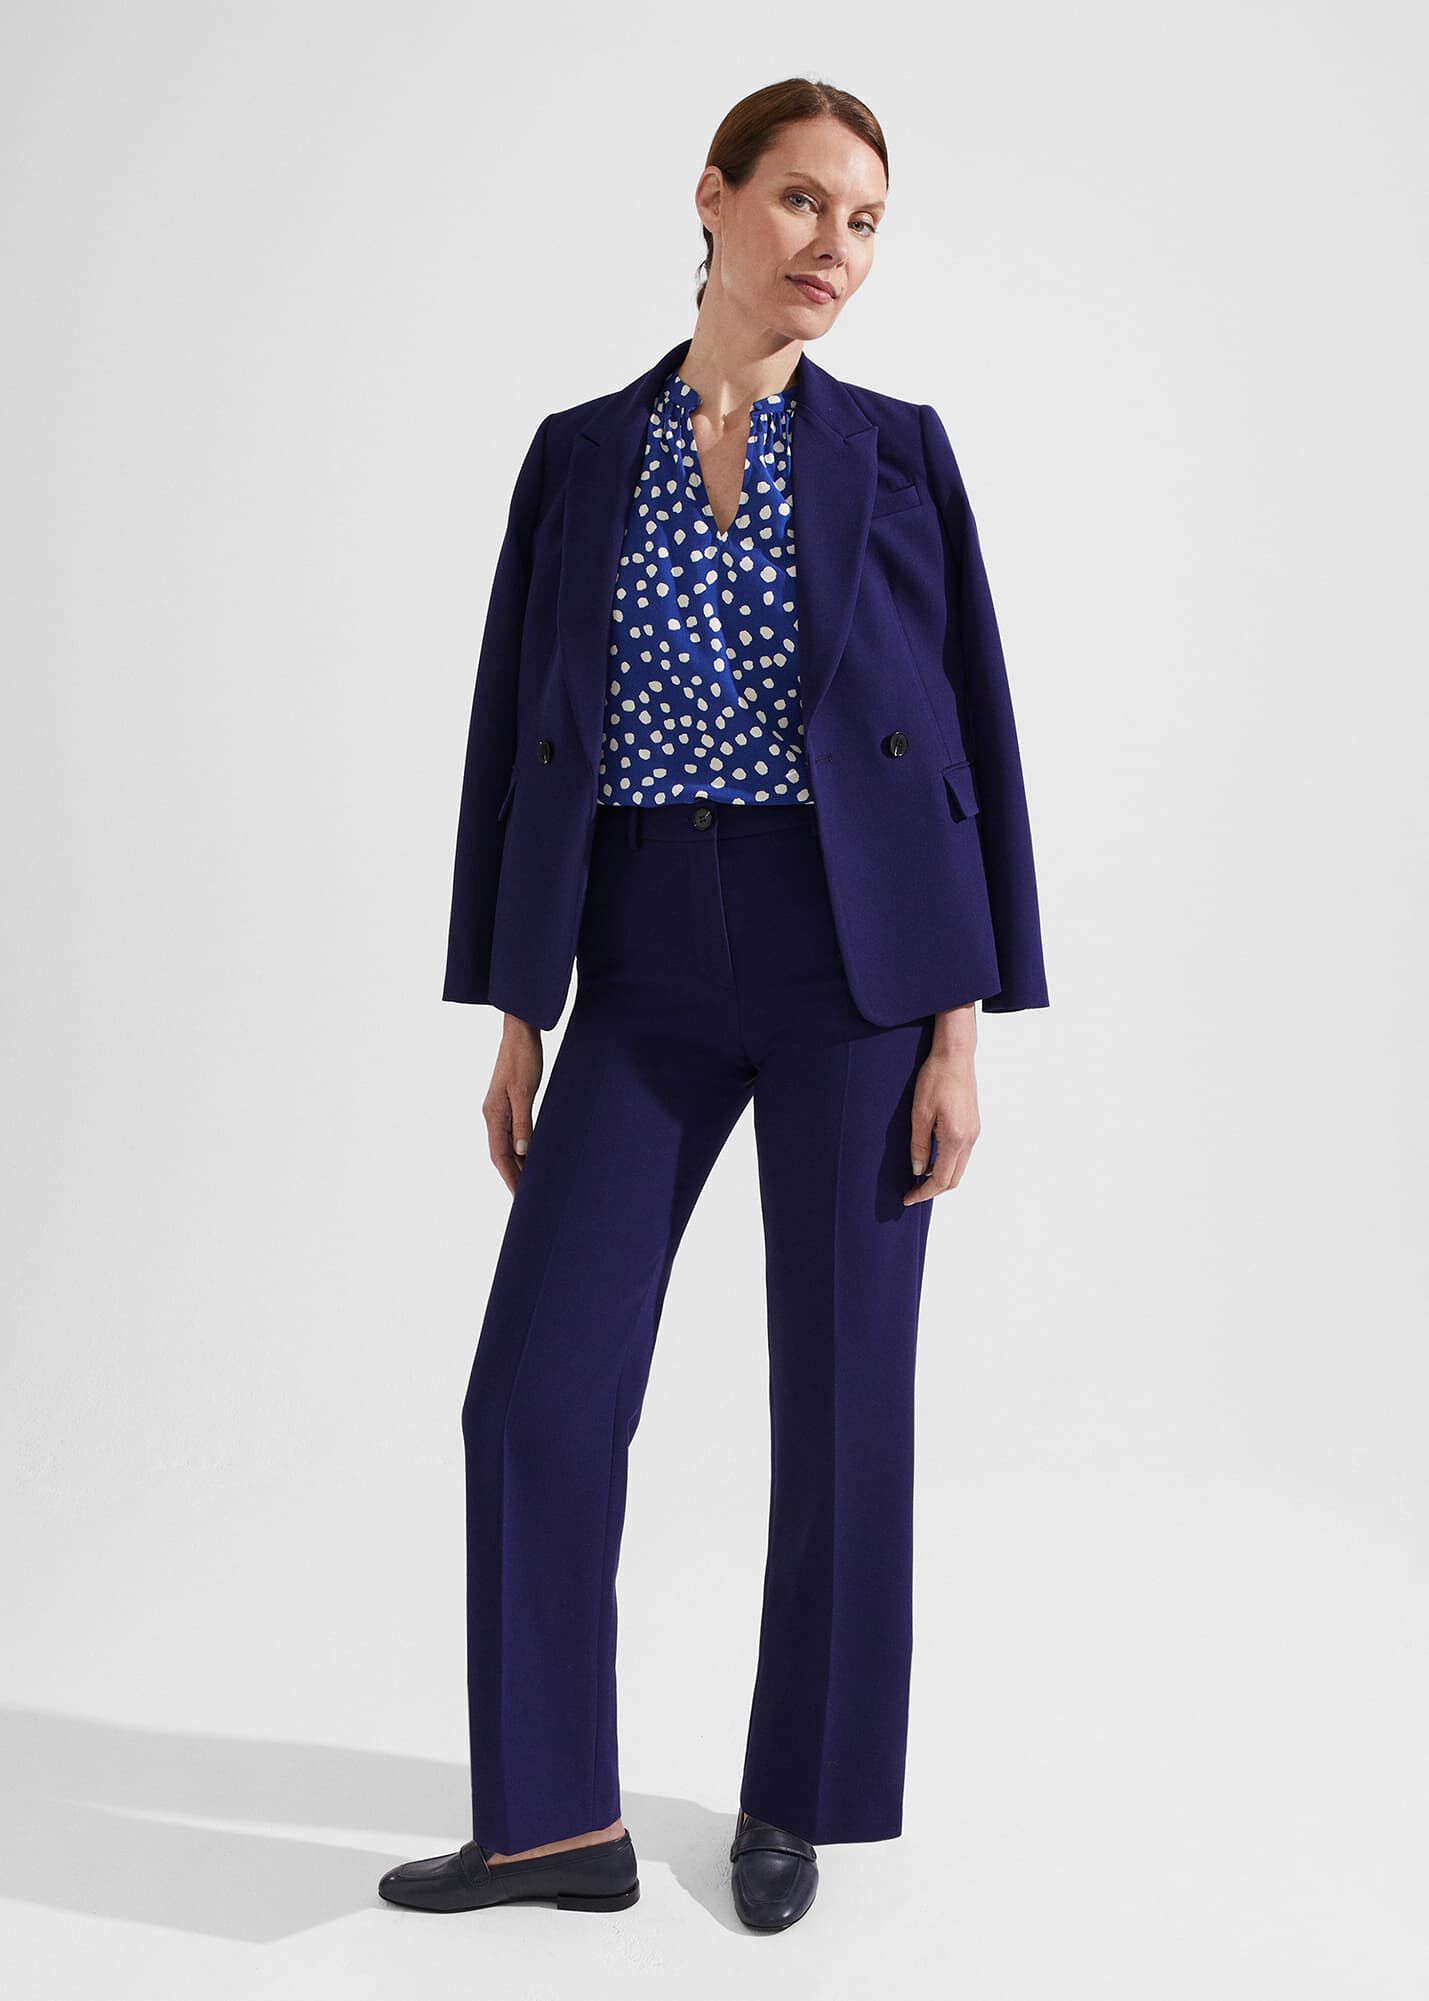 Buy HAUTEMODA Women Blazer and Trouser Co-ord Set (XL, Navy Blue) at  Amazon.in